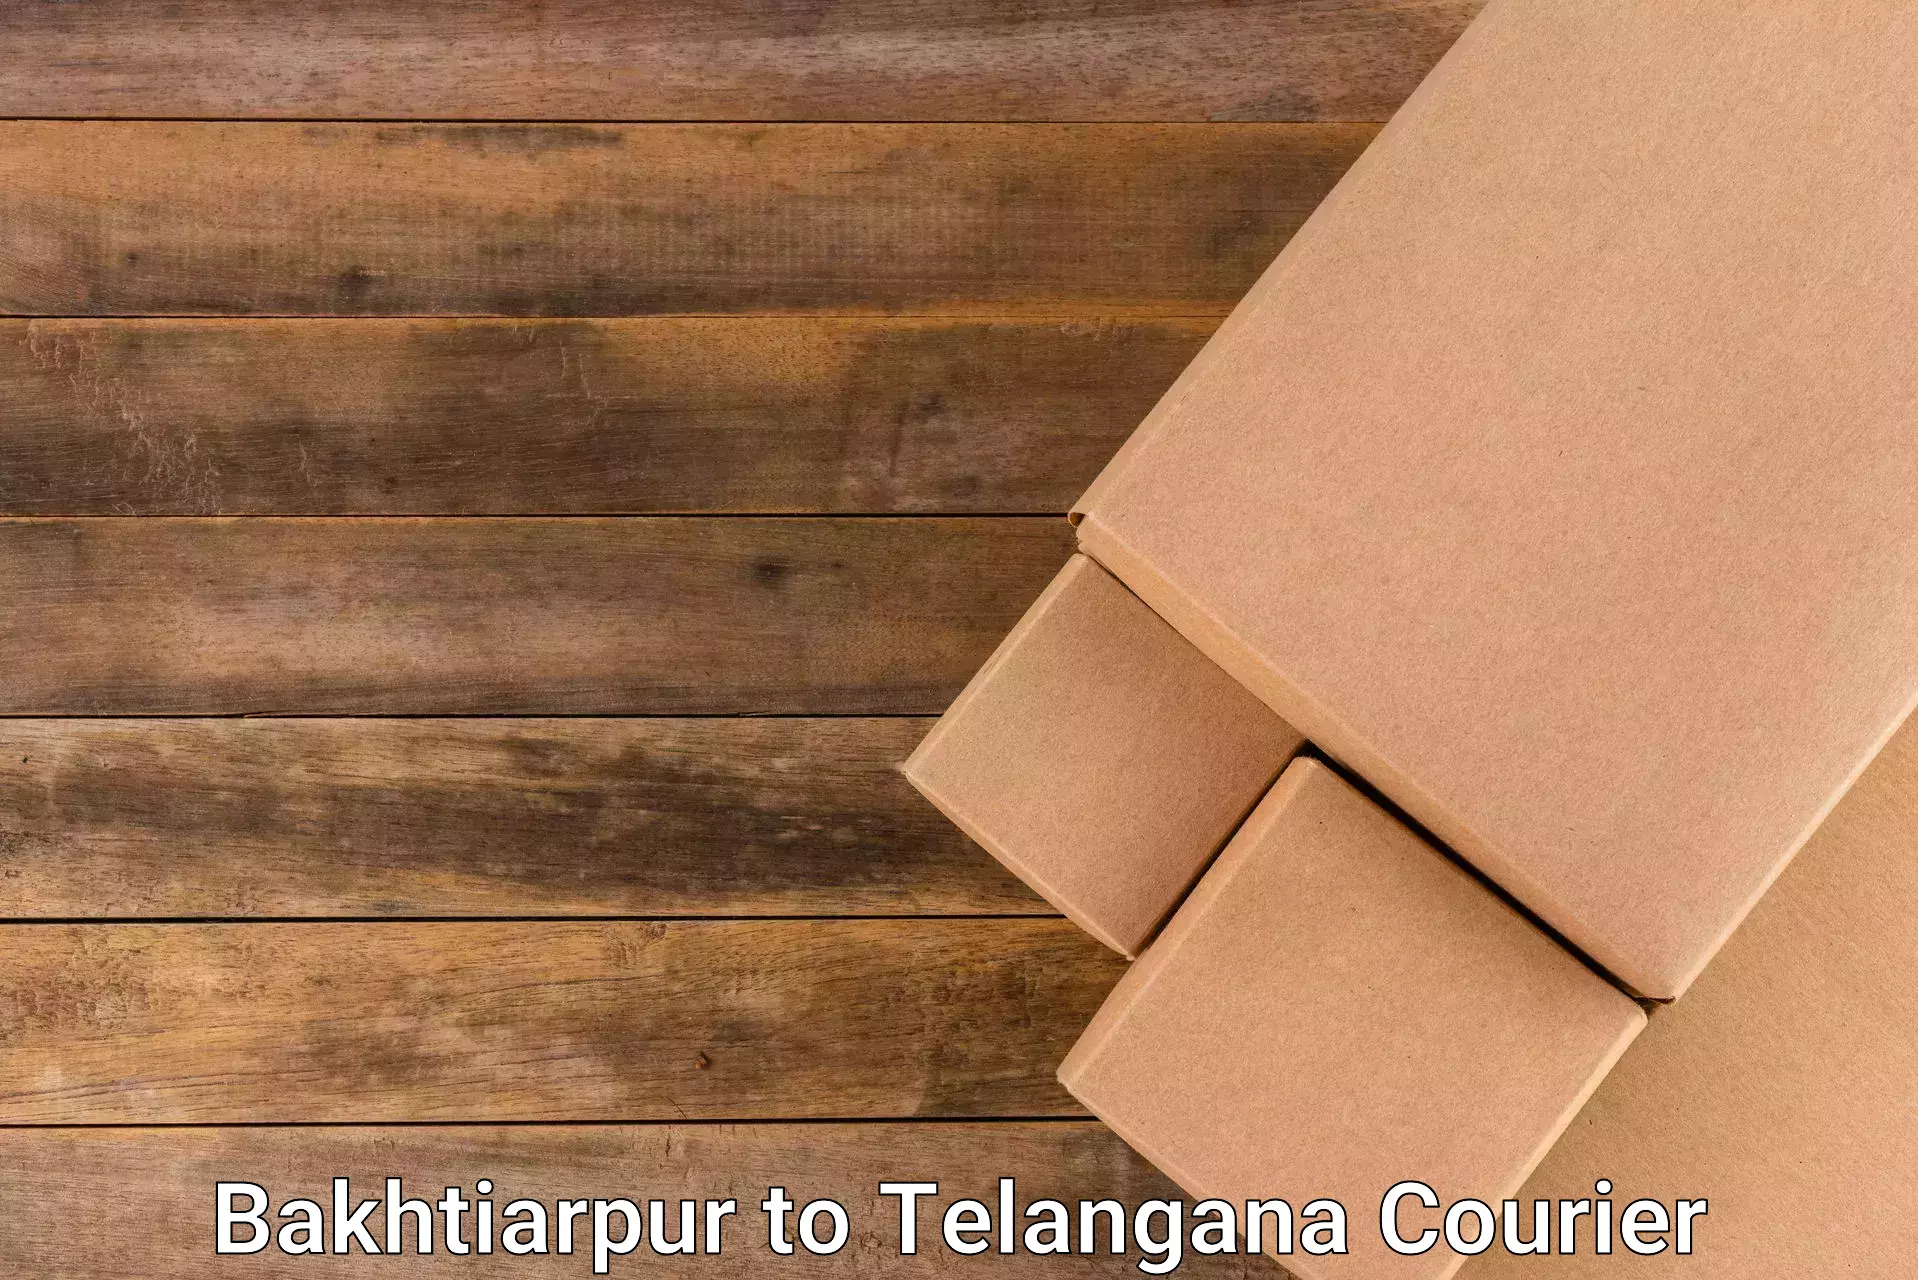 Digital courier platforms Bakhtiarpur to Telangana